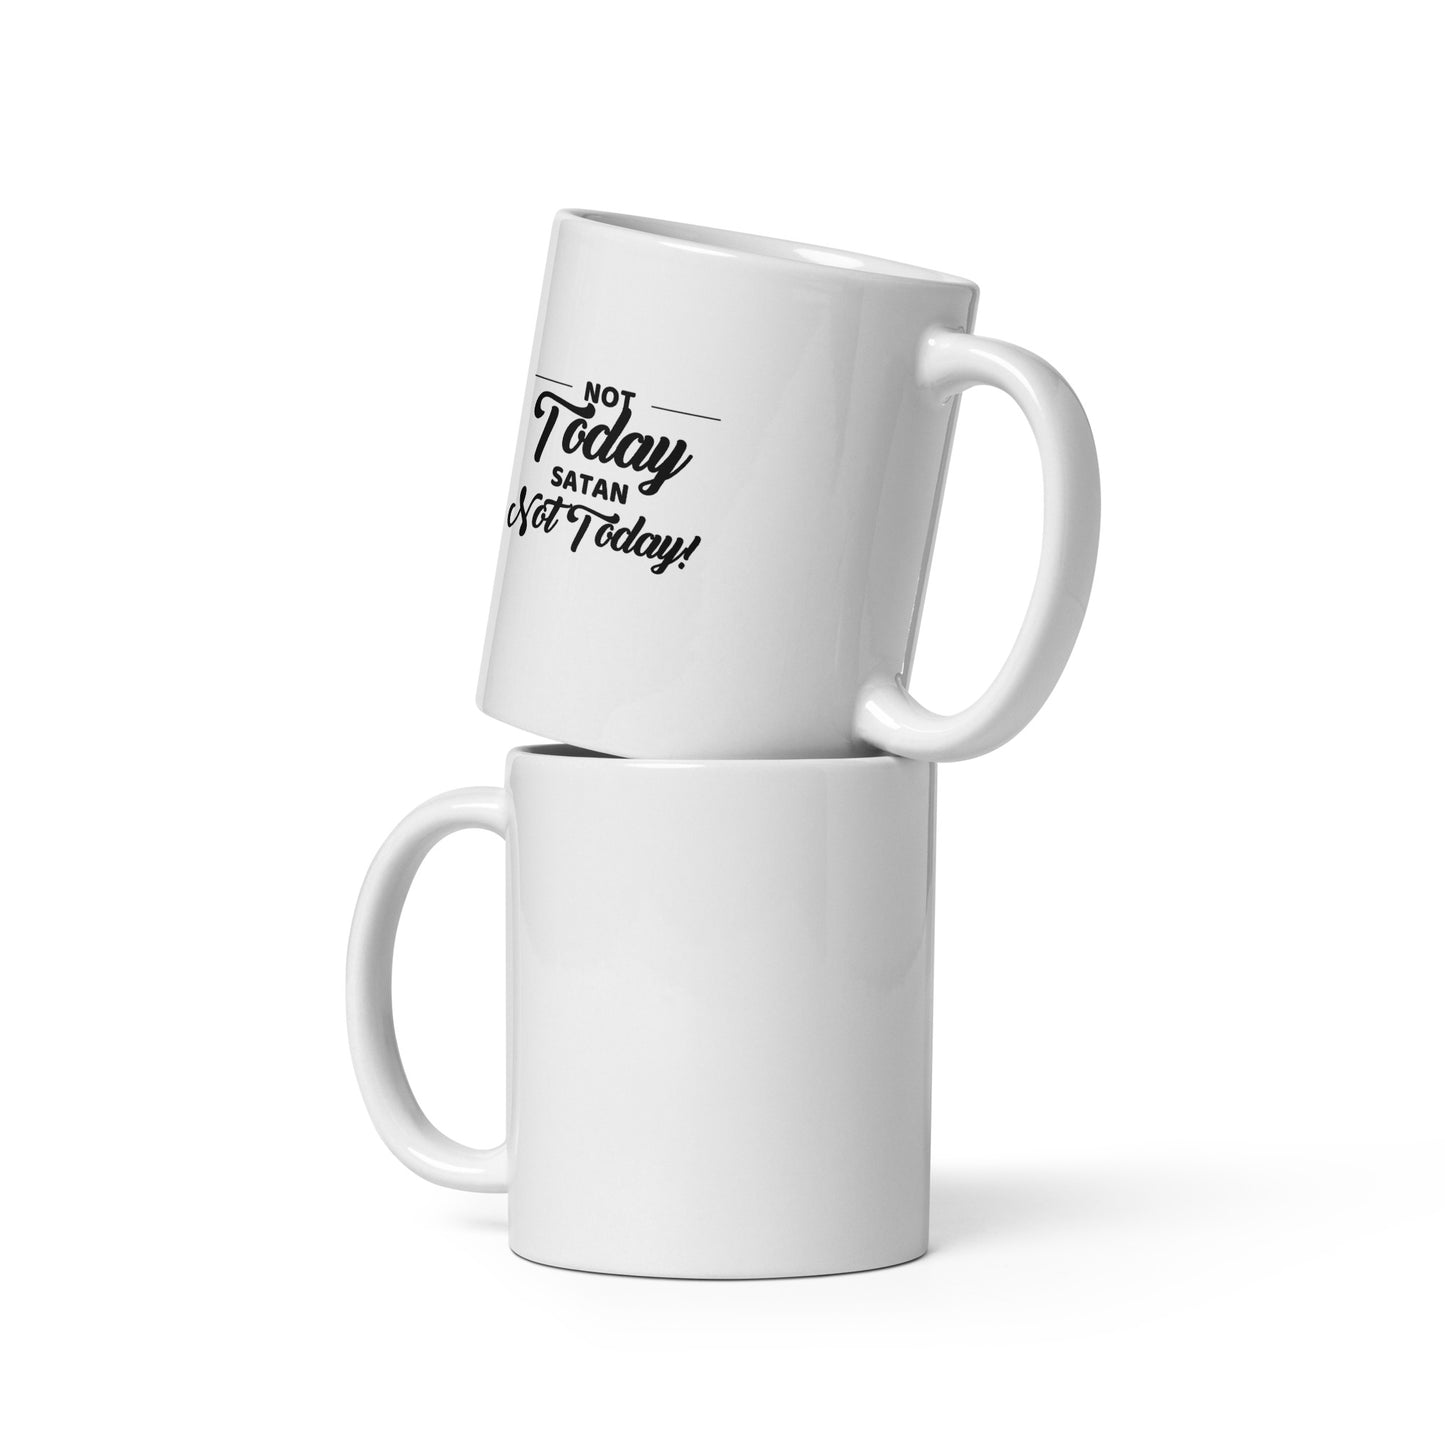 Not today Satan not Today - White glossy mug